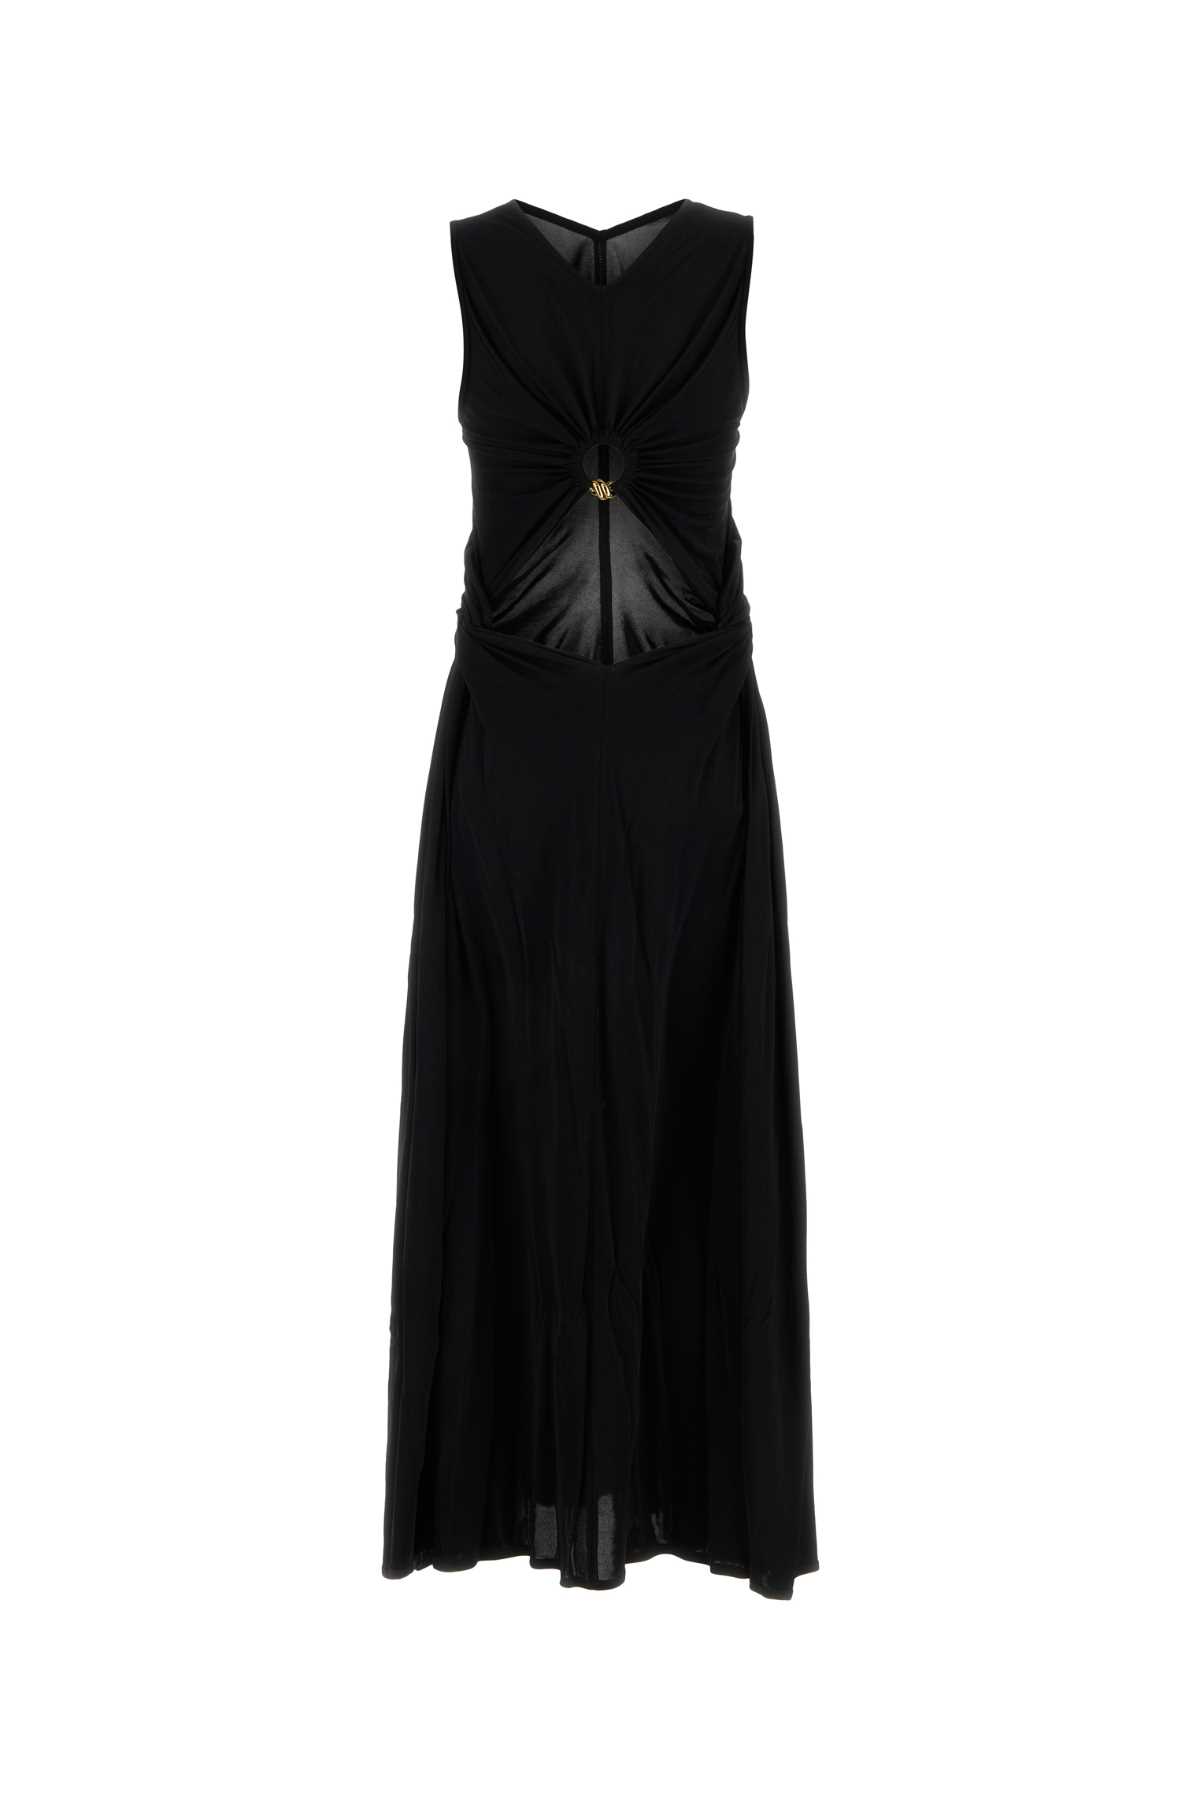 Bottega Veneta Black Jersey Long Dress